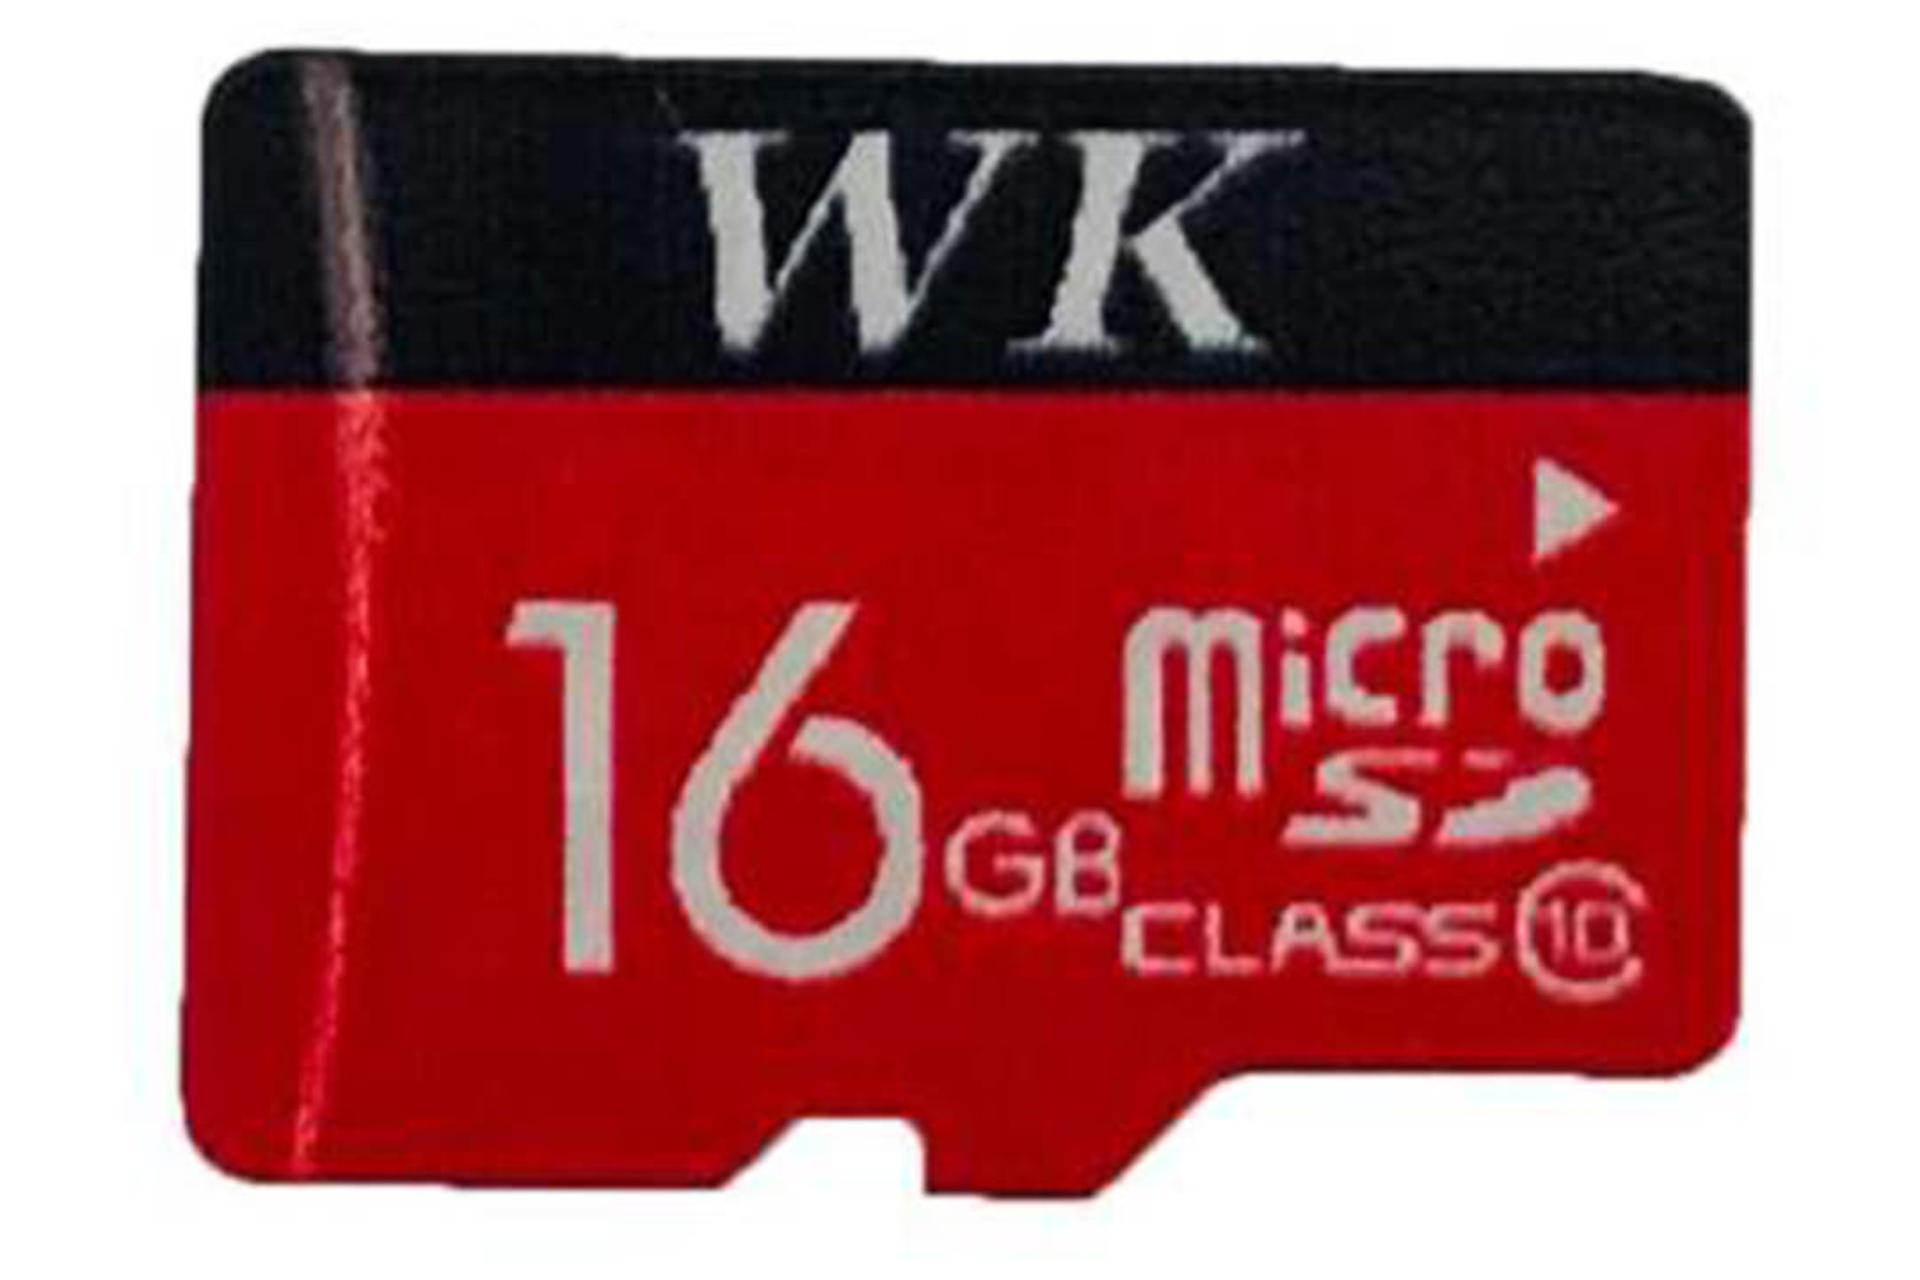 WK UHS-1 microSDHC Class 10 UHS-I U1 16GB